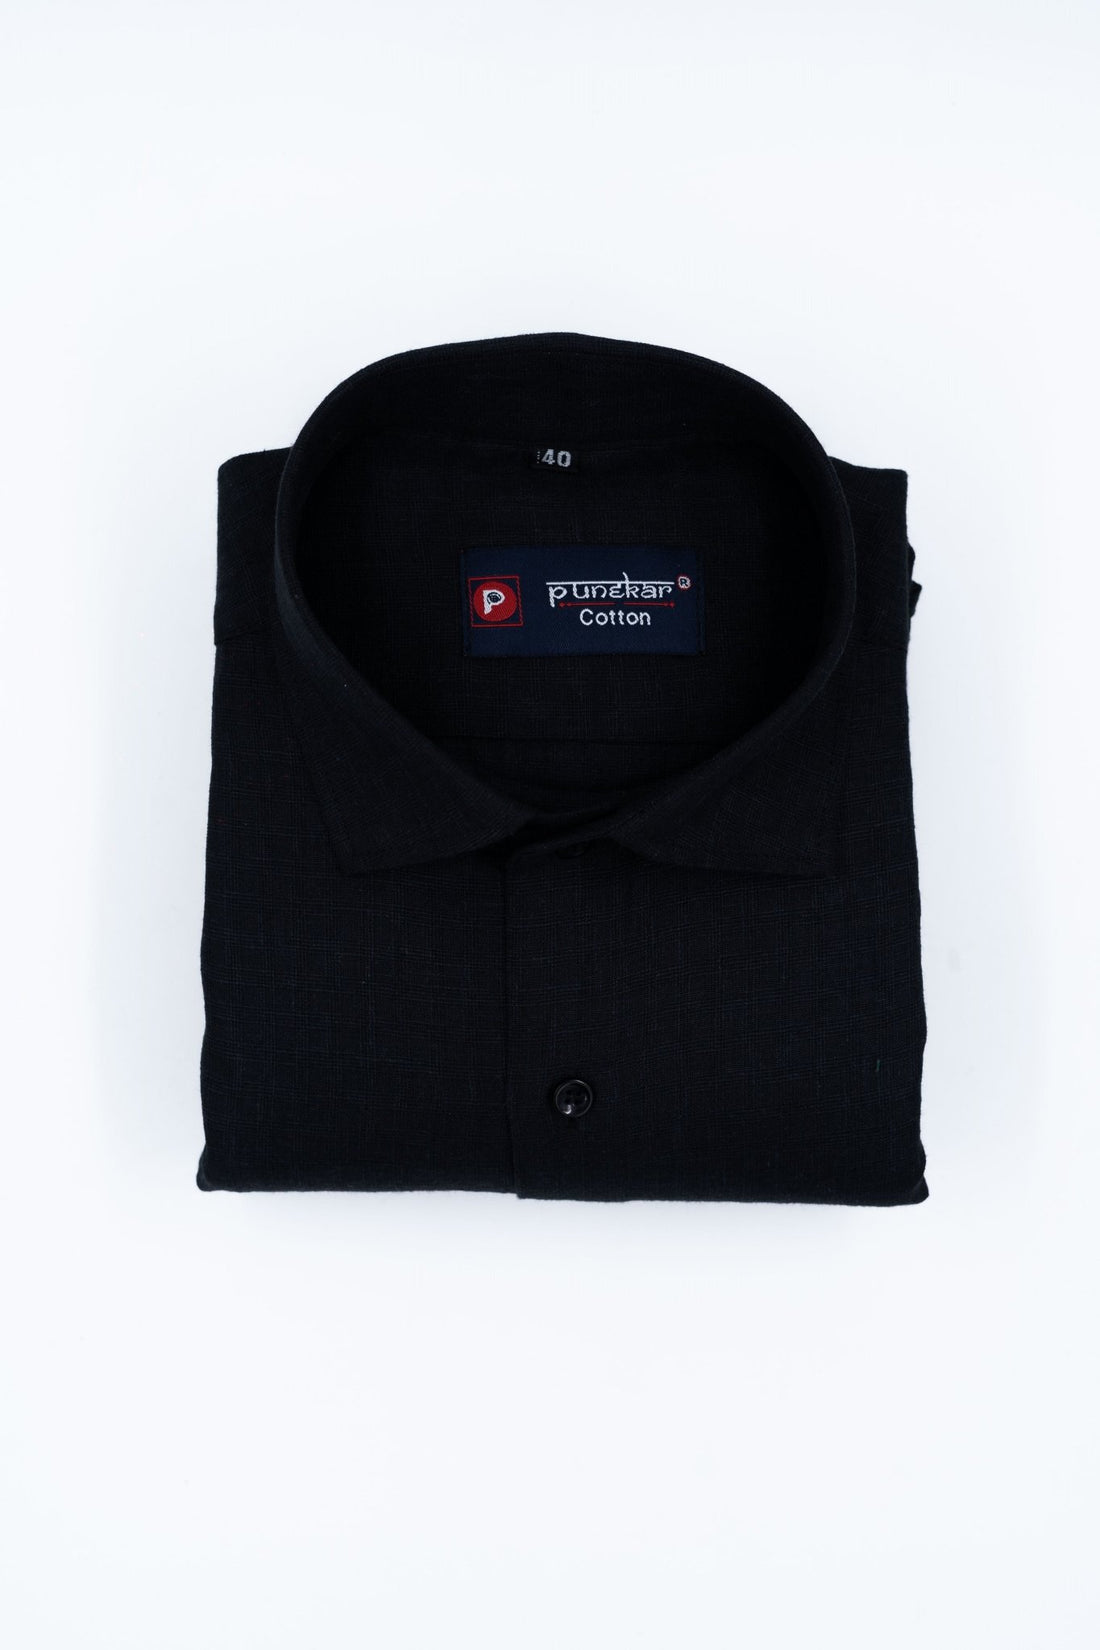 Black Color Cotton Self Woven Checks Handmade Shirts For Men&